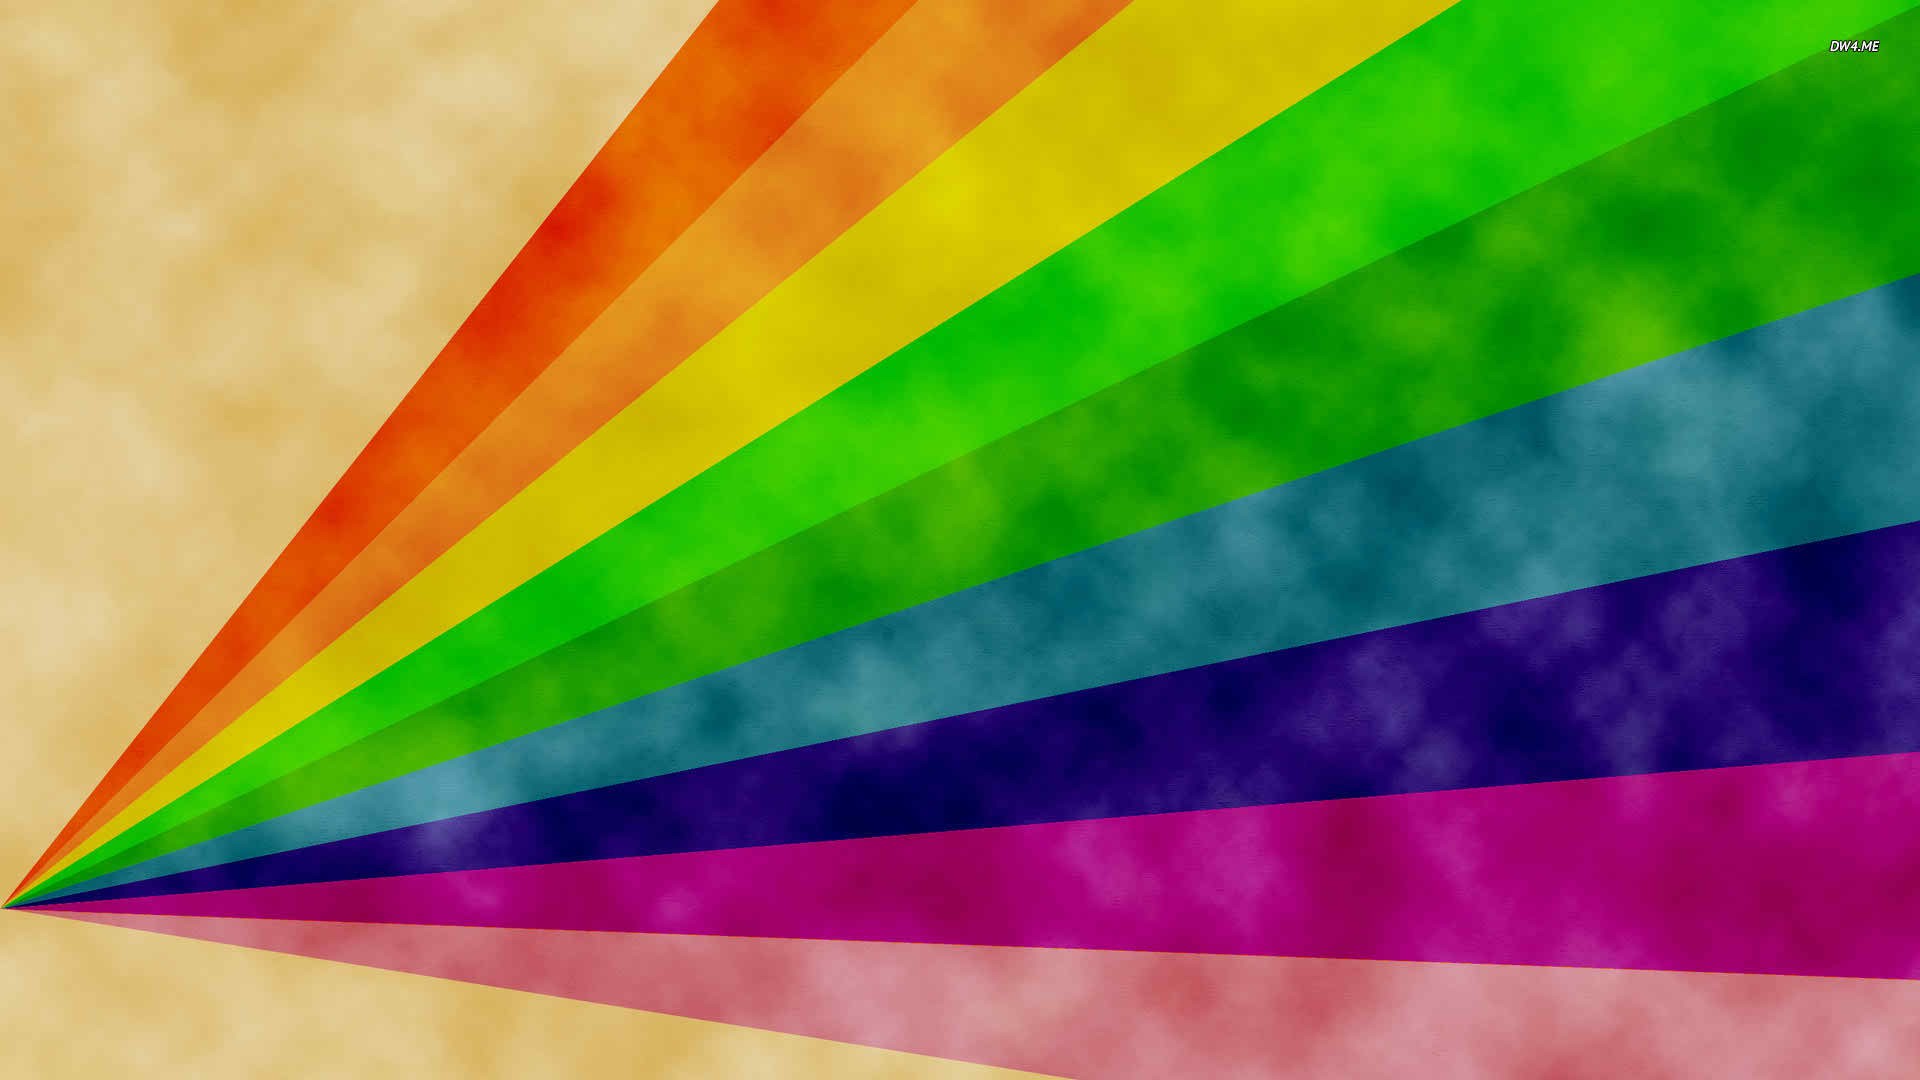 Rainbow Colors Background Wallpaper Hd 2020 Live Wallpaper Hd